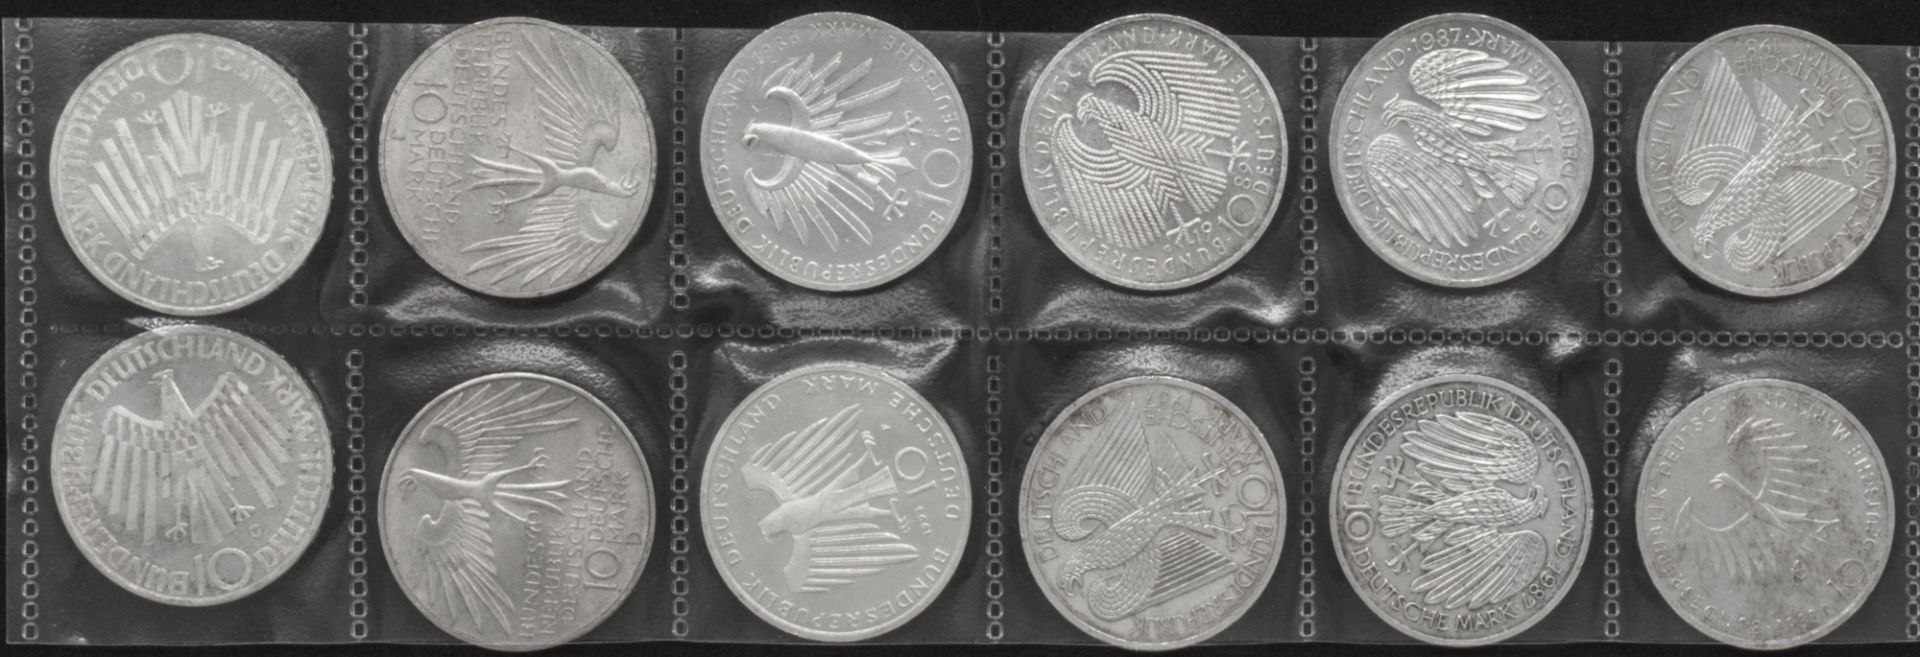 Lot 10.- DM - Silbermünzen. Insgesamt 12 St. Erhaltung: vz. - Image 2 of 2